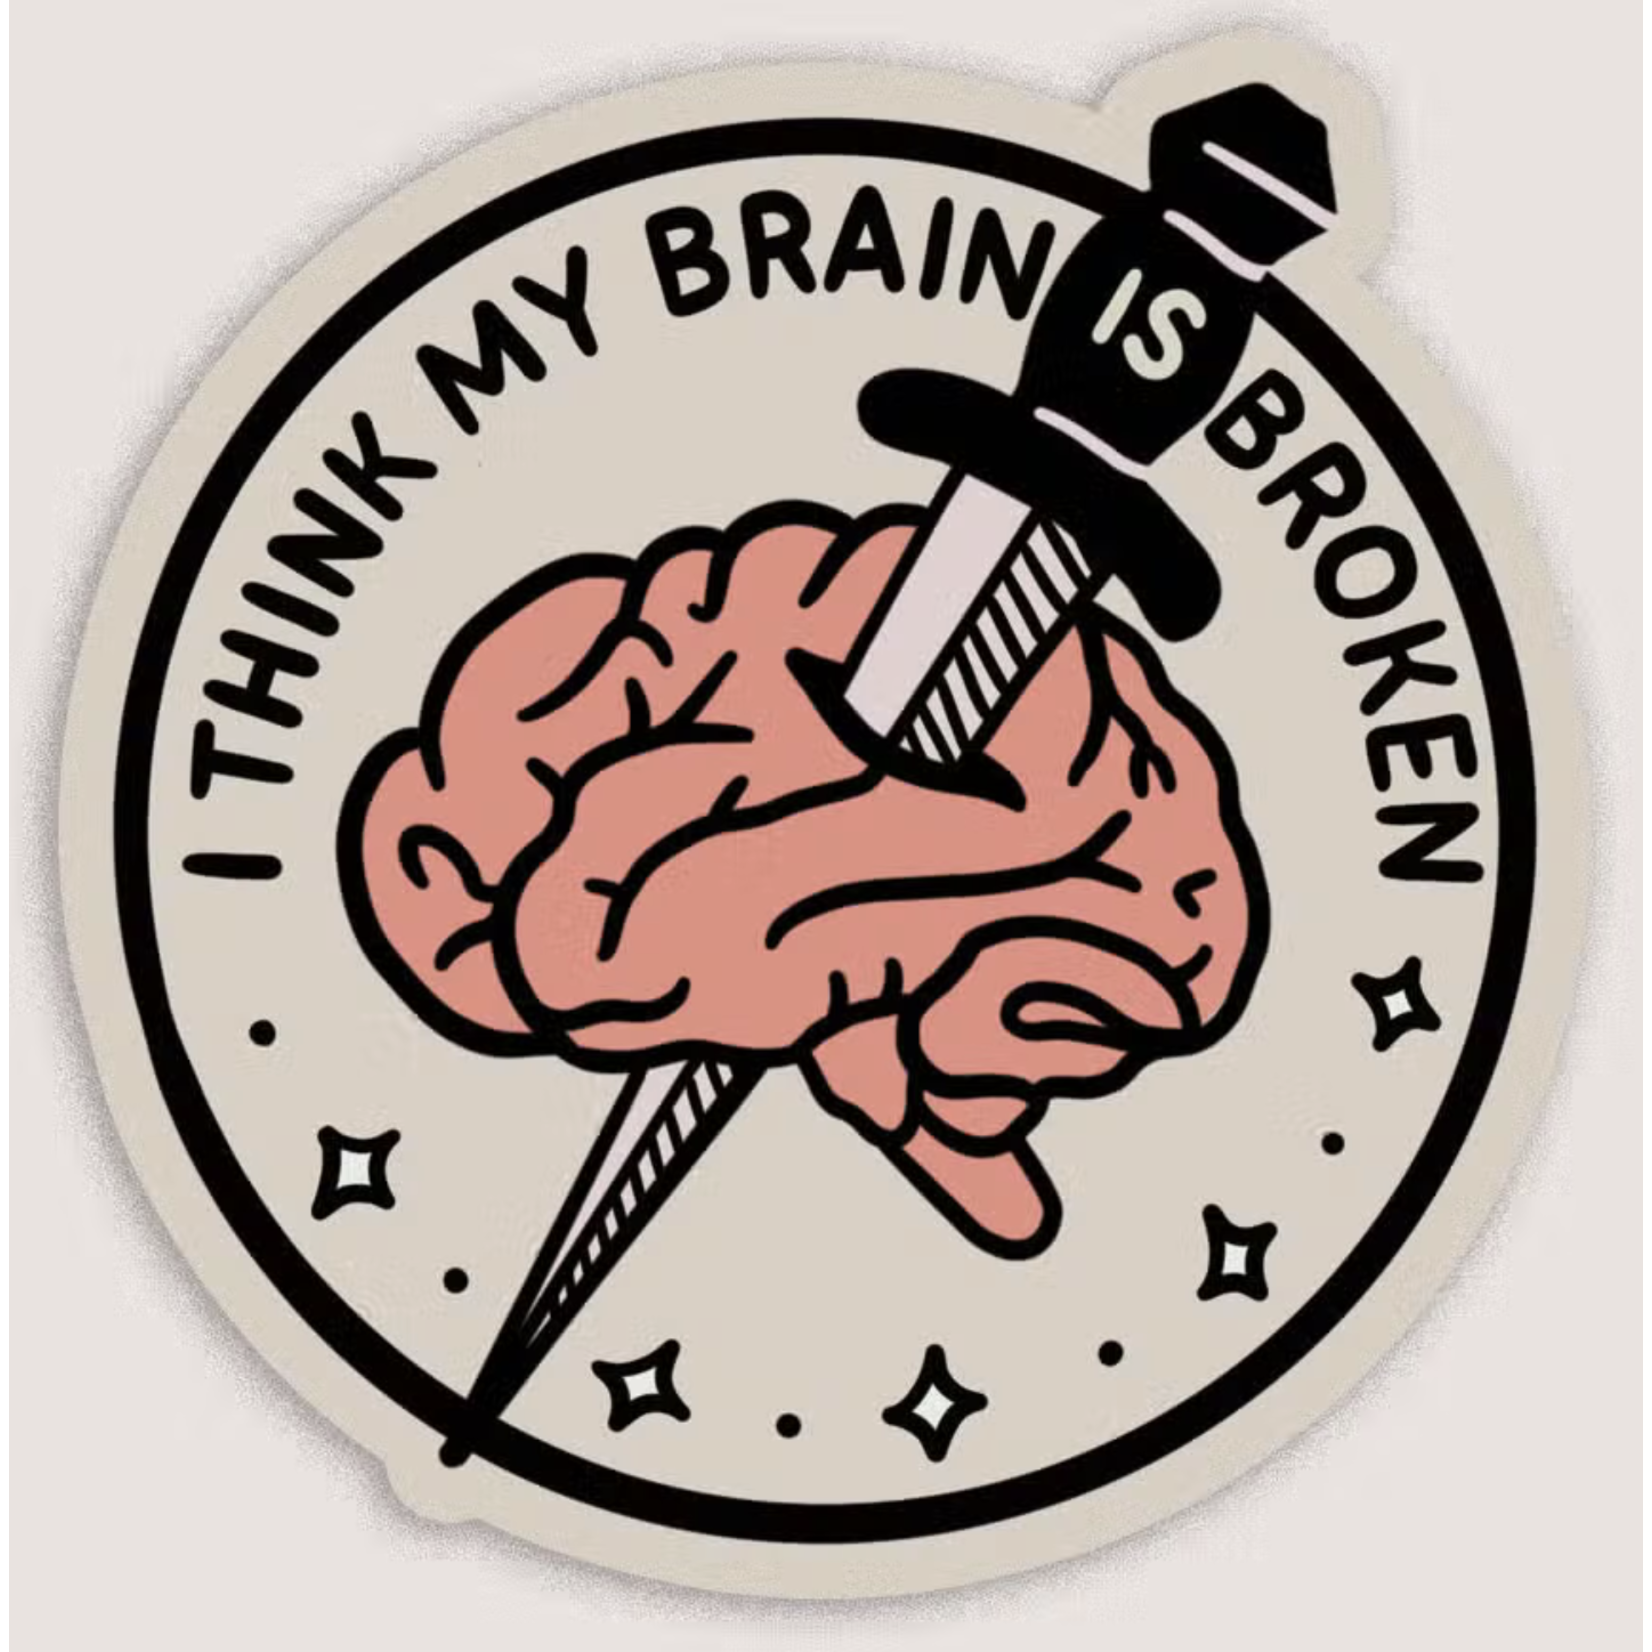 Stay Home Club Brain is Broken Sticker